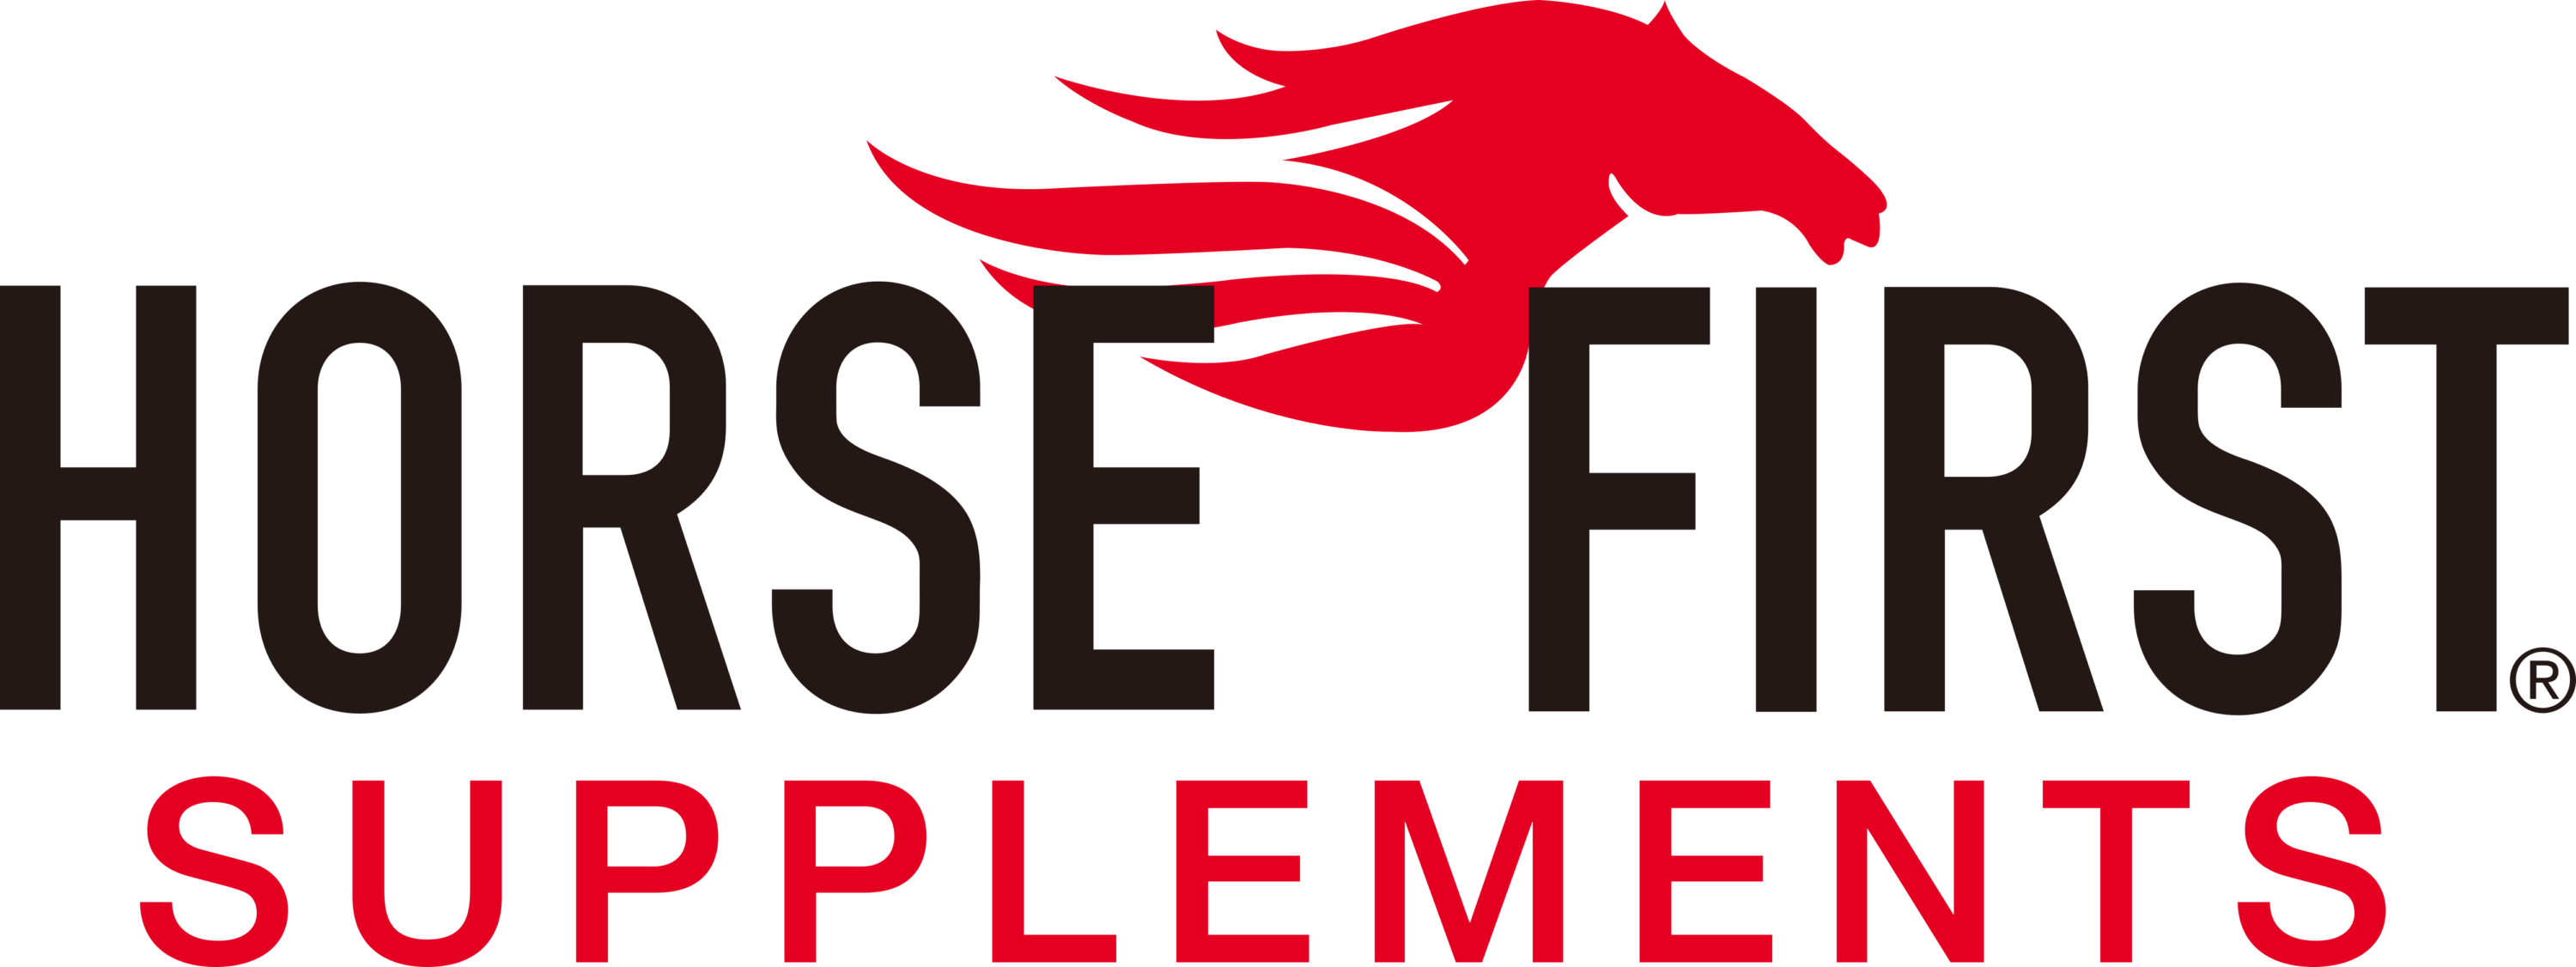 Horse First Supplements Logo